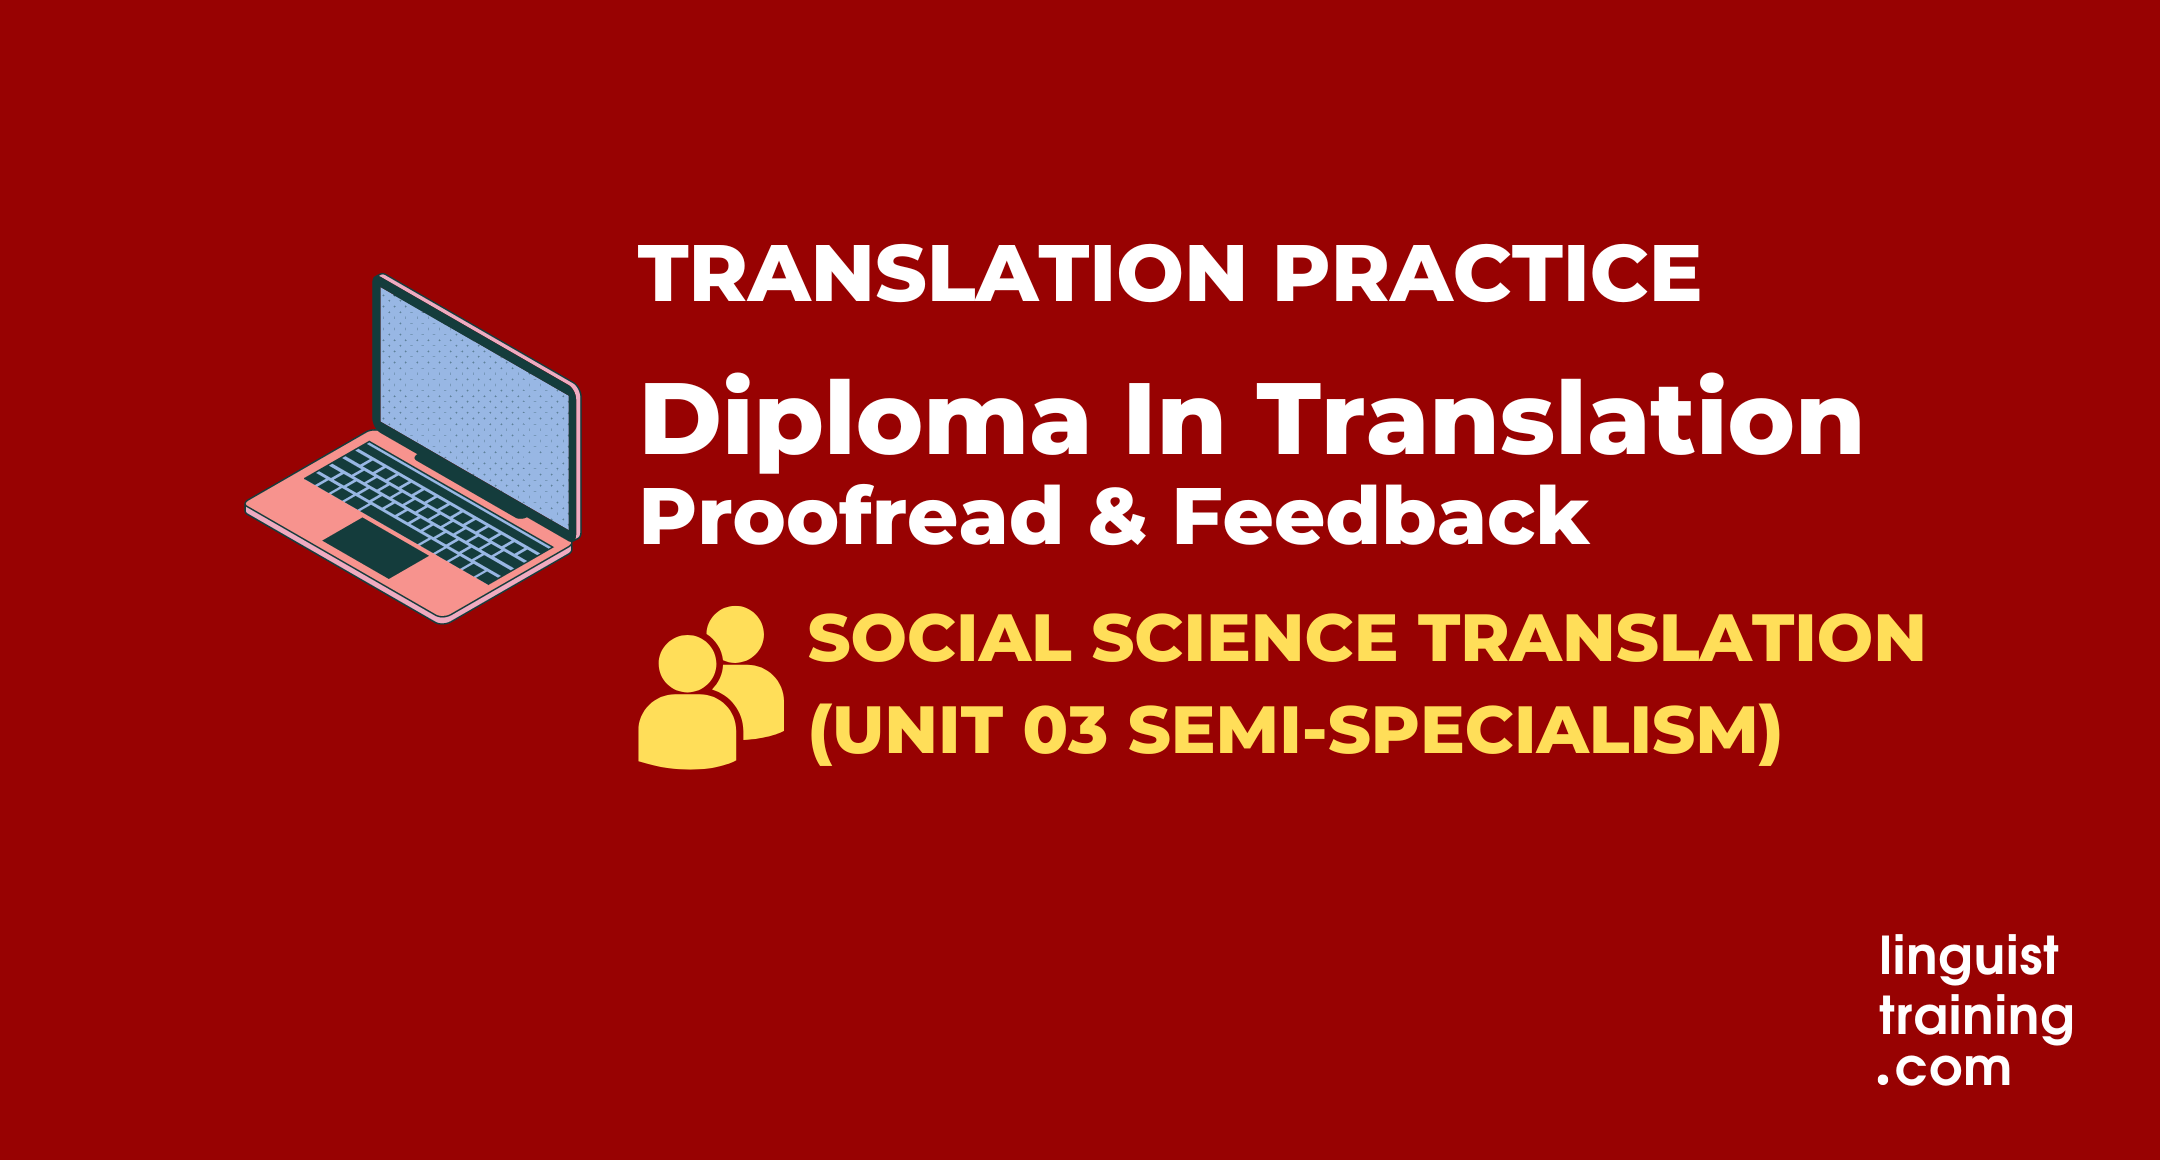 DipTrans SOCIAL SCIENCE Translation Practice